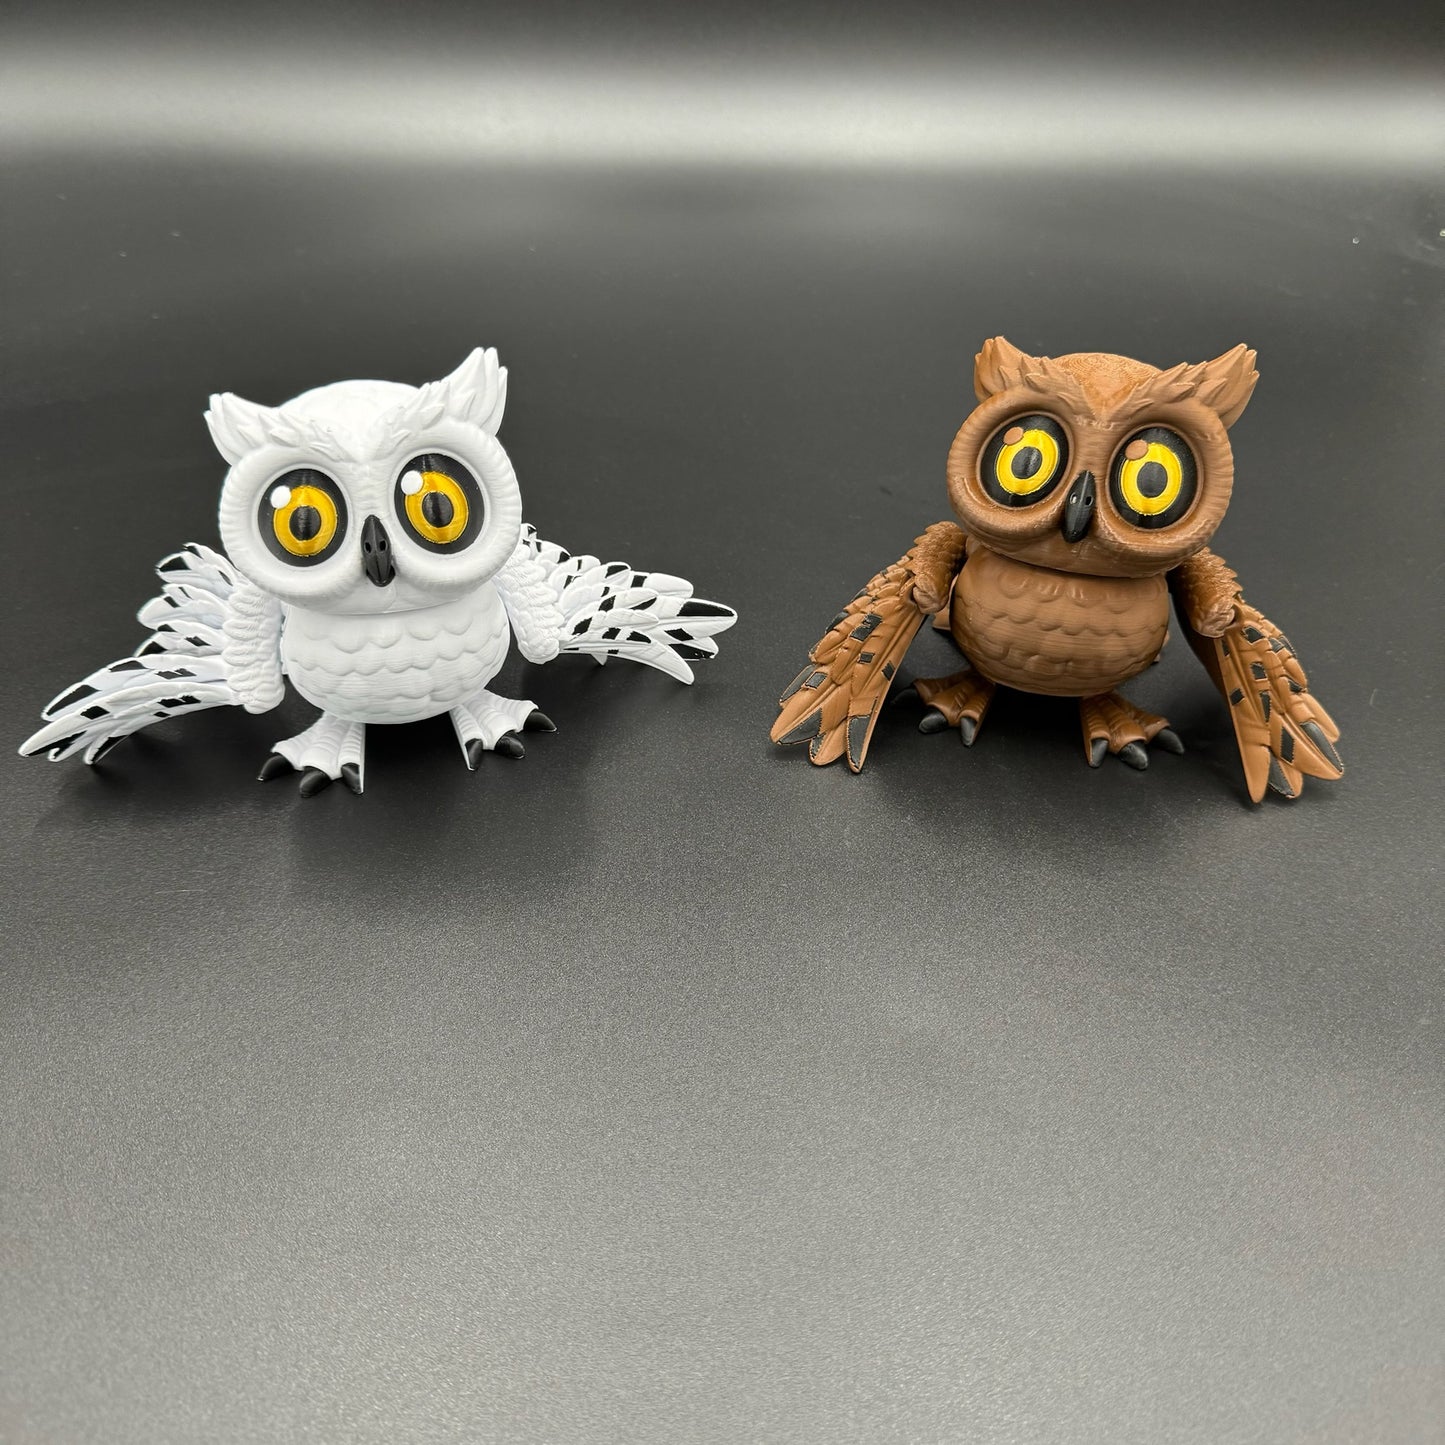 3D Printed Owl